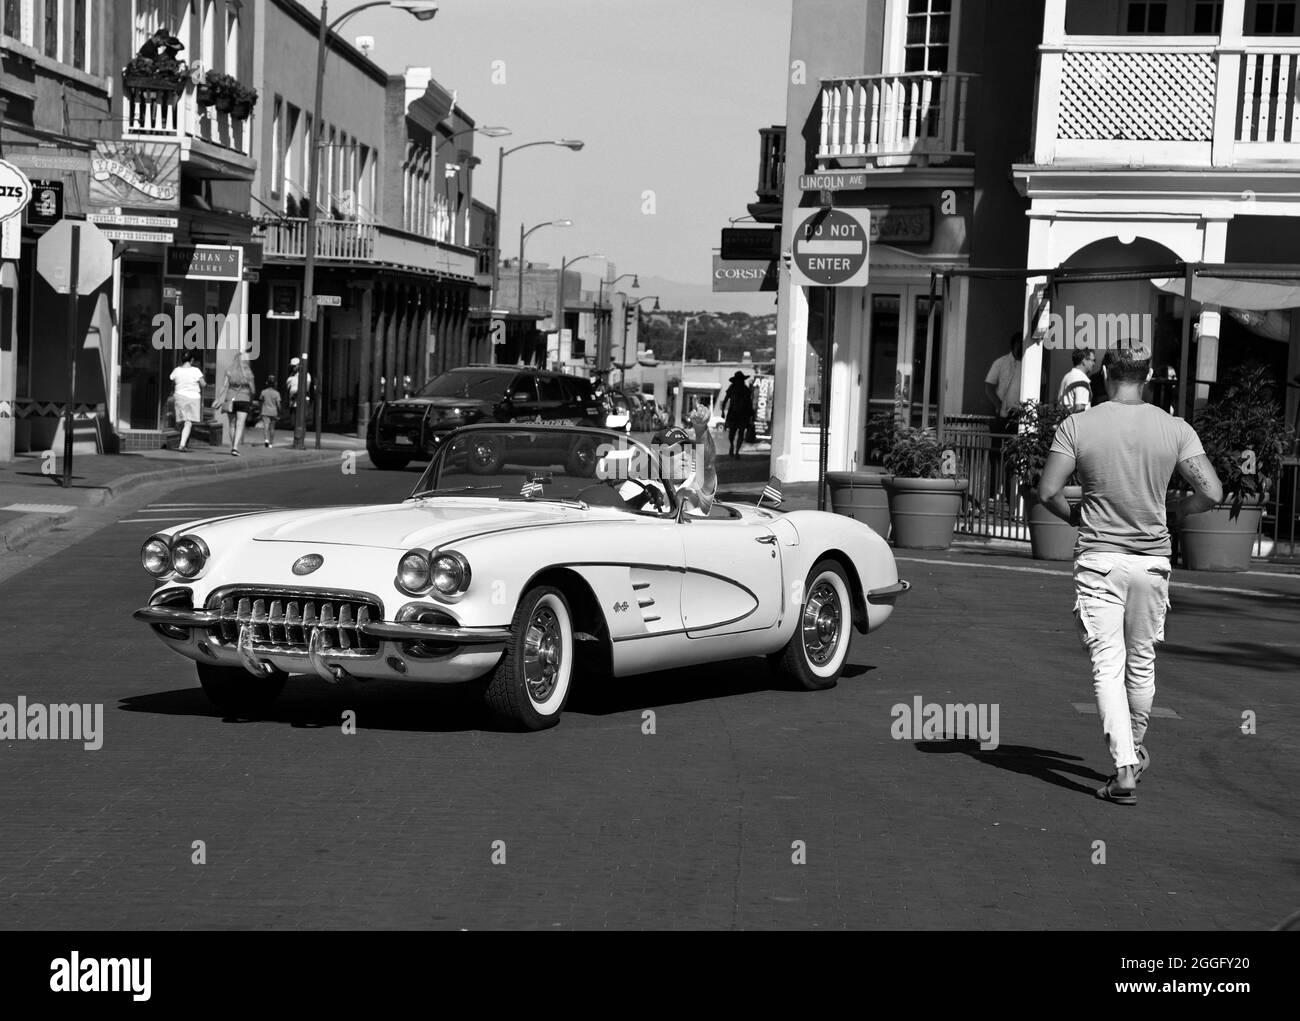 A man drives his vintage 1959 Chevrolet Corvette convertible along a street in downtown Santa Fe, New Mexico. Stock Photo